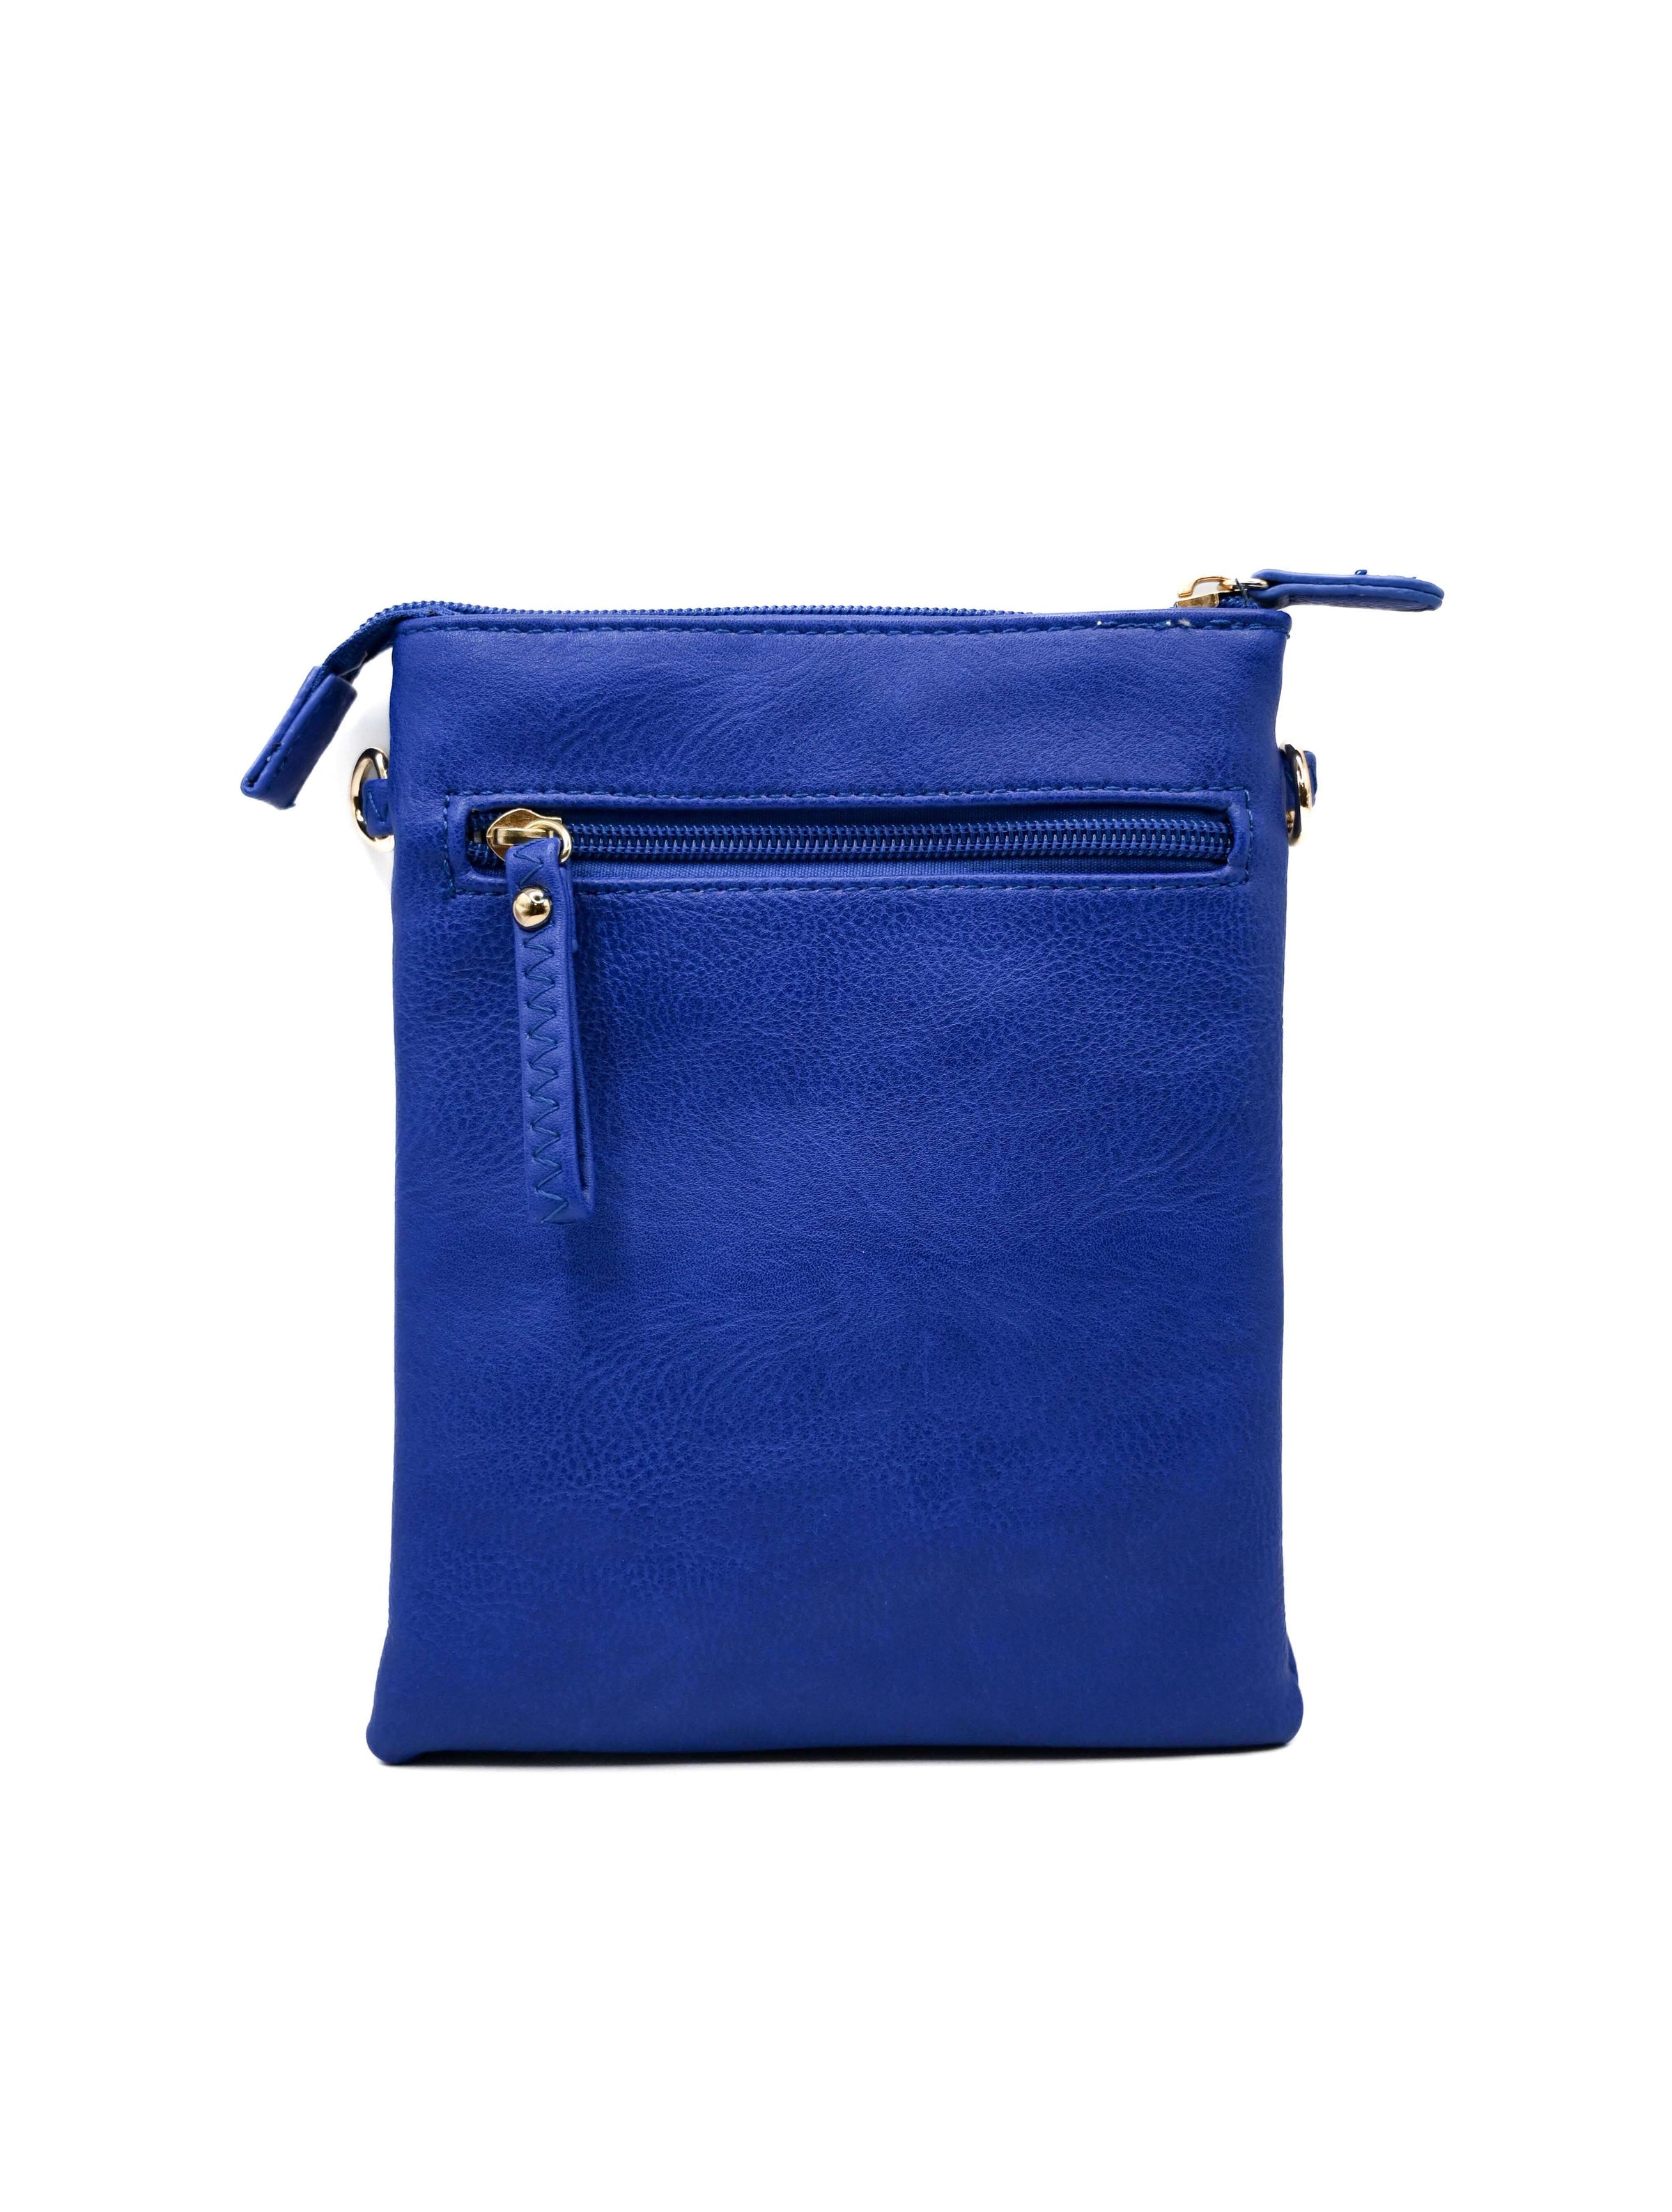 Crossbody Zipper Bag in Royal Blue